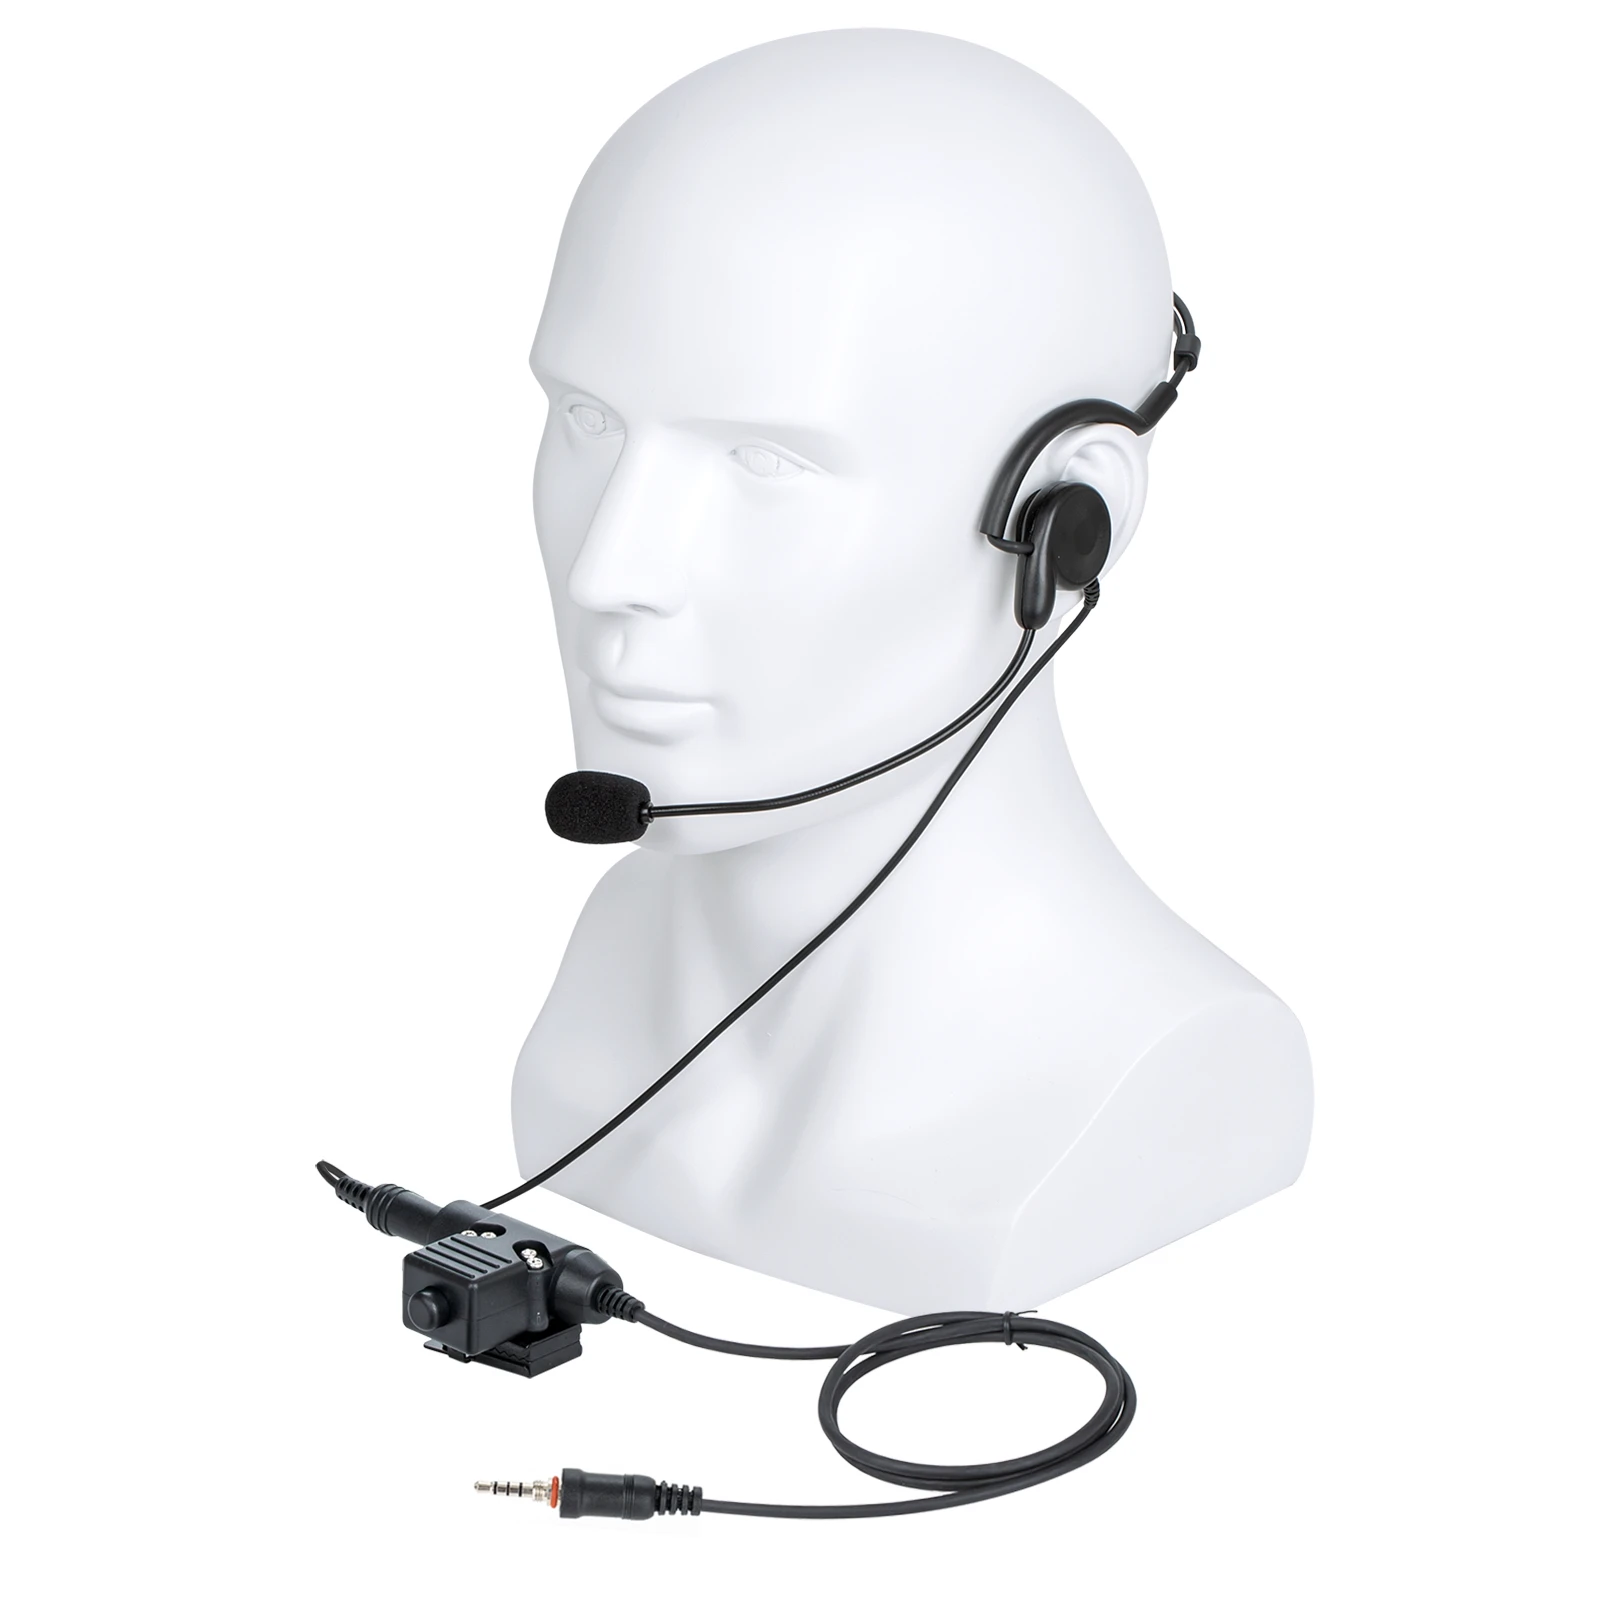 walkie talkie Radio 7.1mm bone conduction Headset Earpiece Microphone with U94 PTT Adapter For Yaesu Vertex VX-6R VX-7R FT-270R